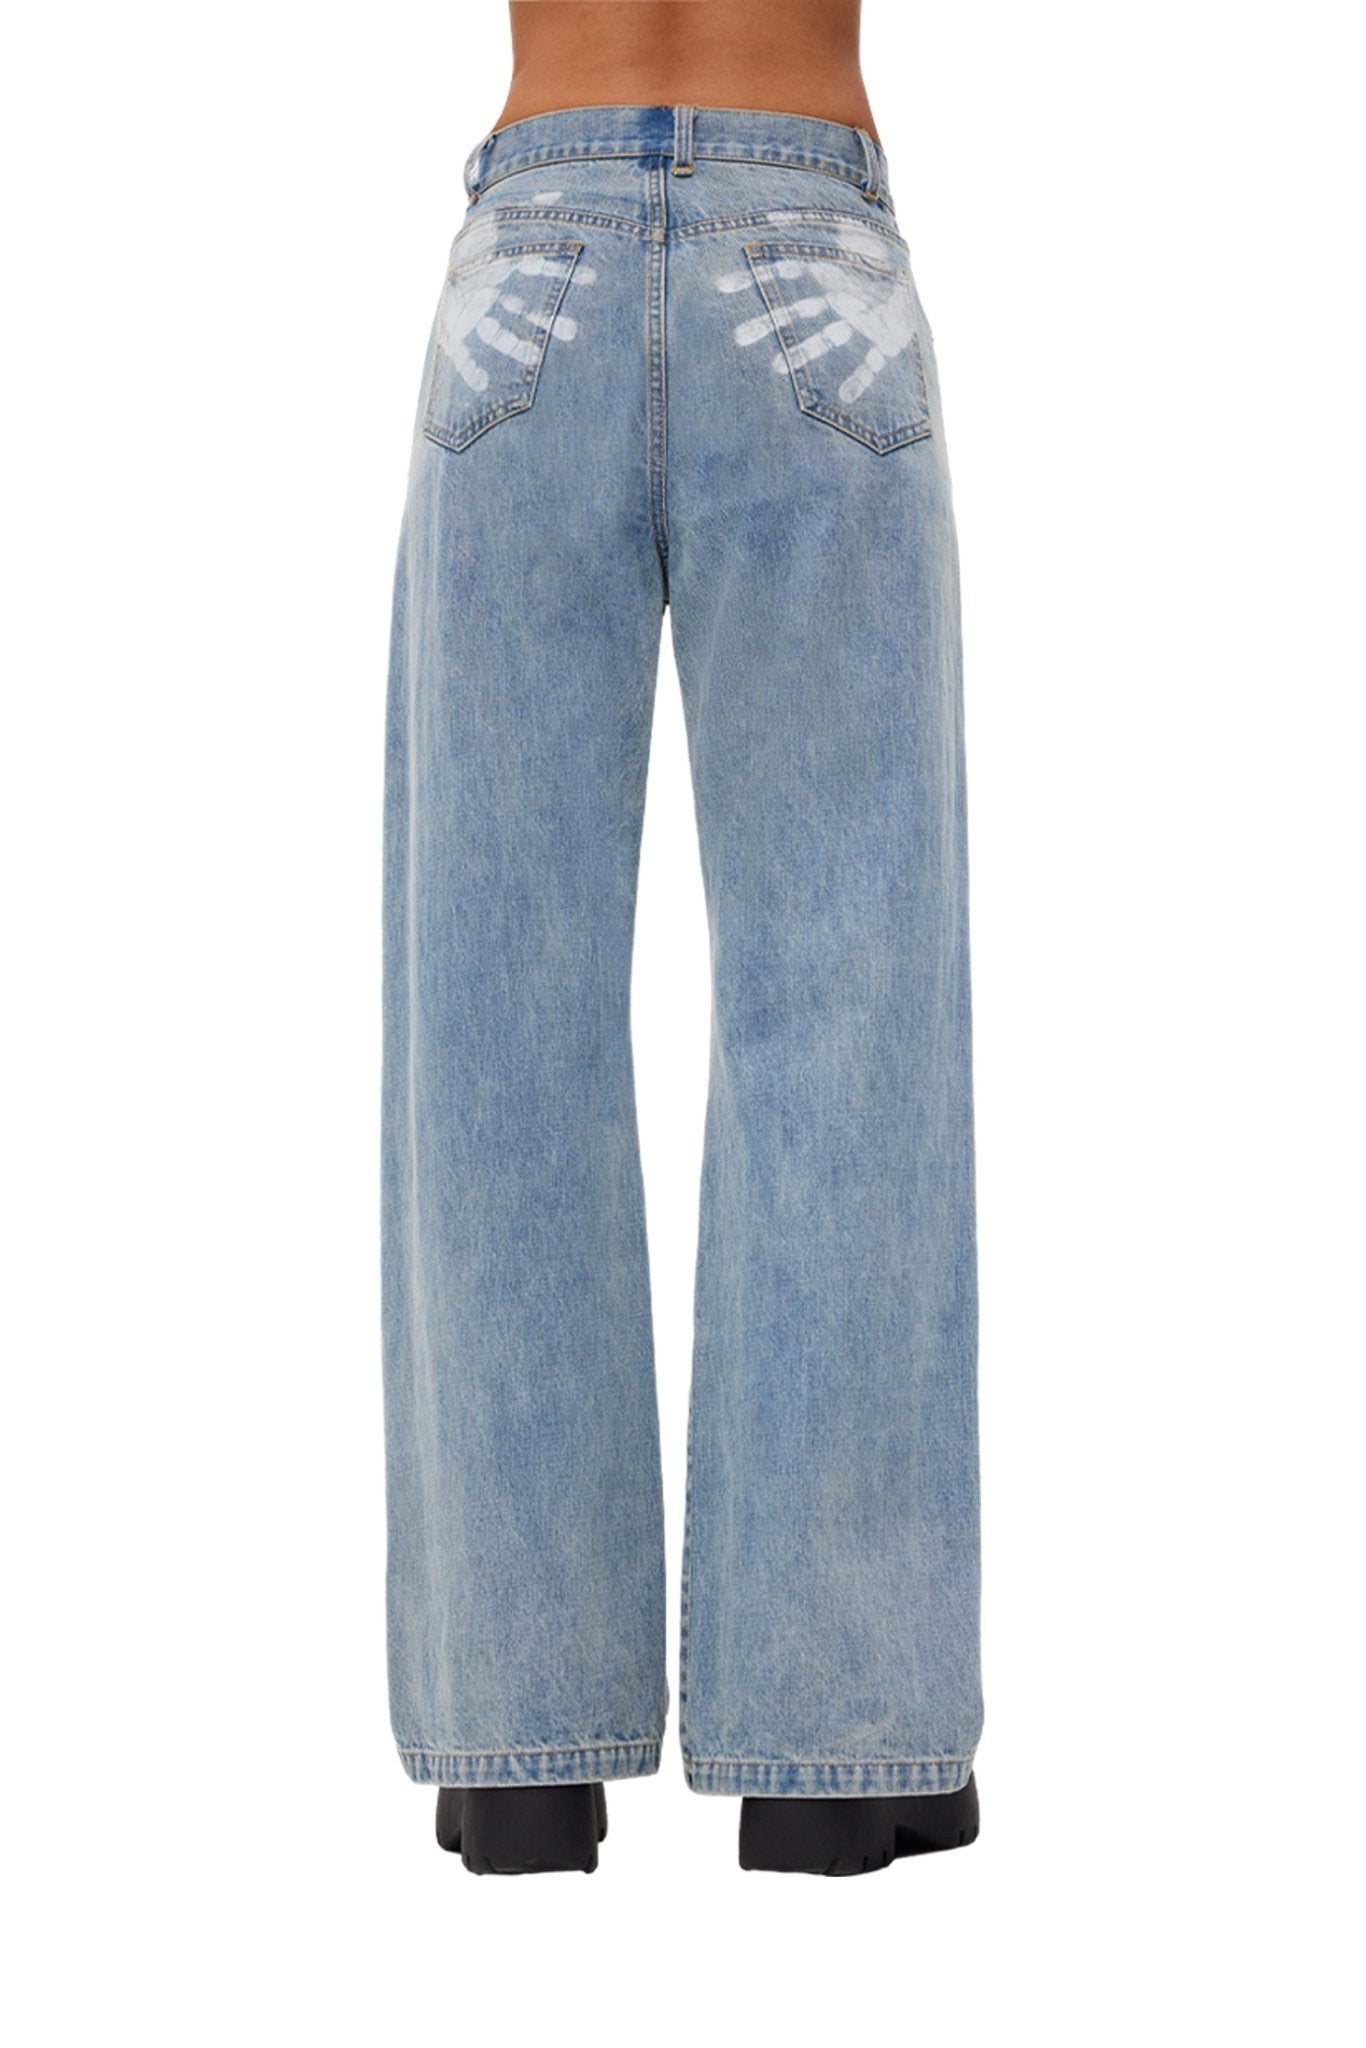 ANN ANDELMAN Blue Palm Print Jeans | MADA IN CHINA